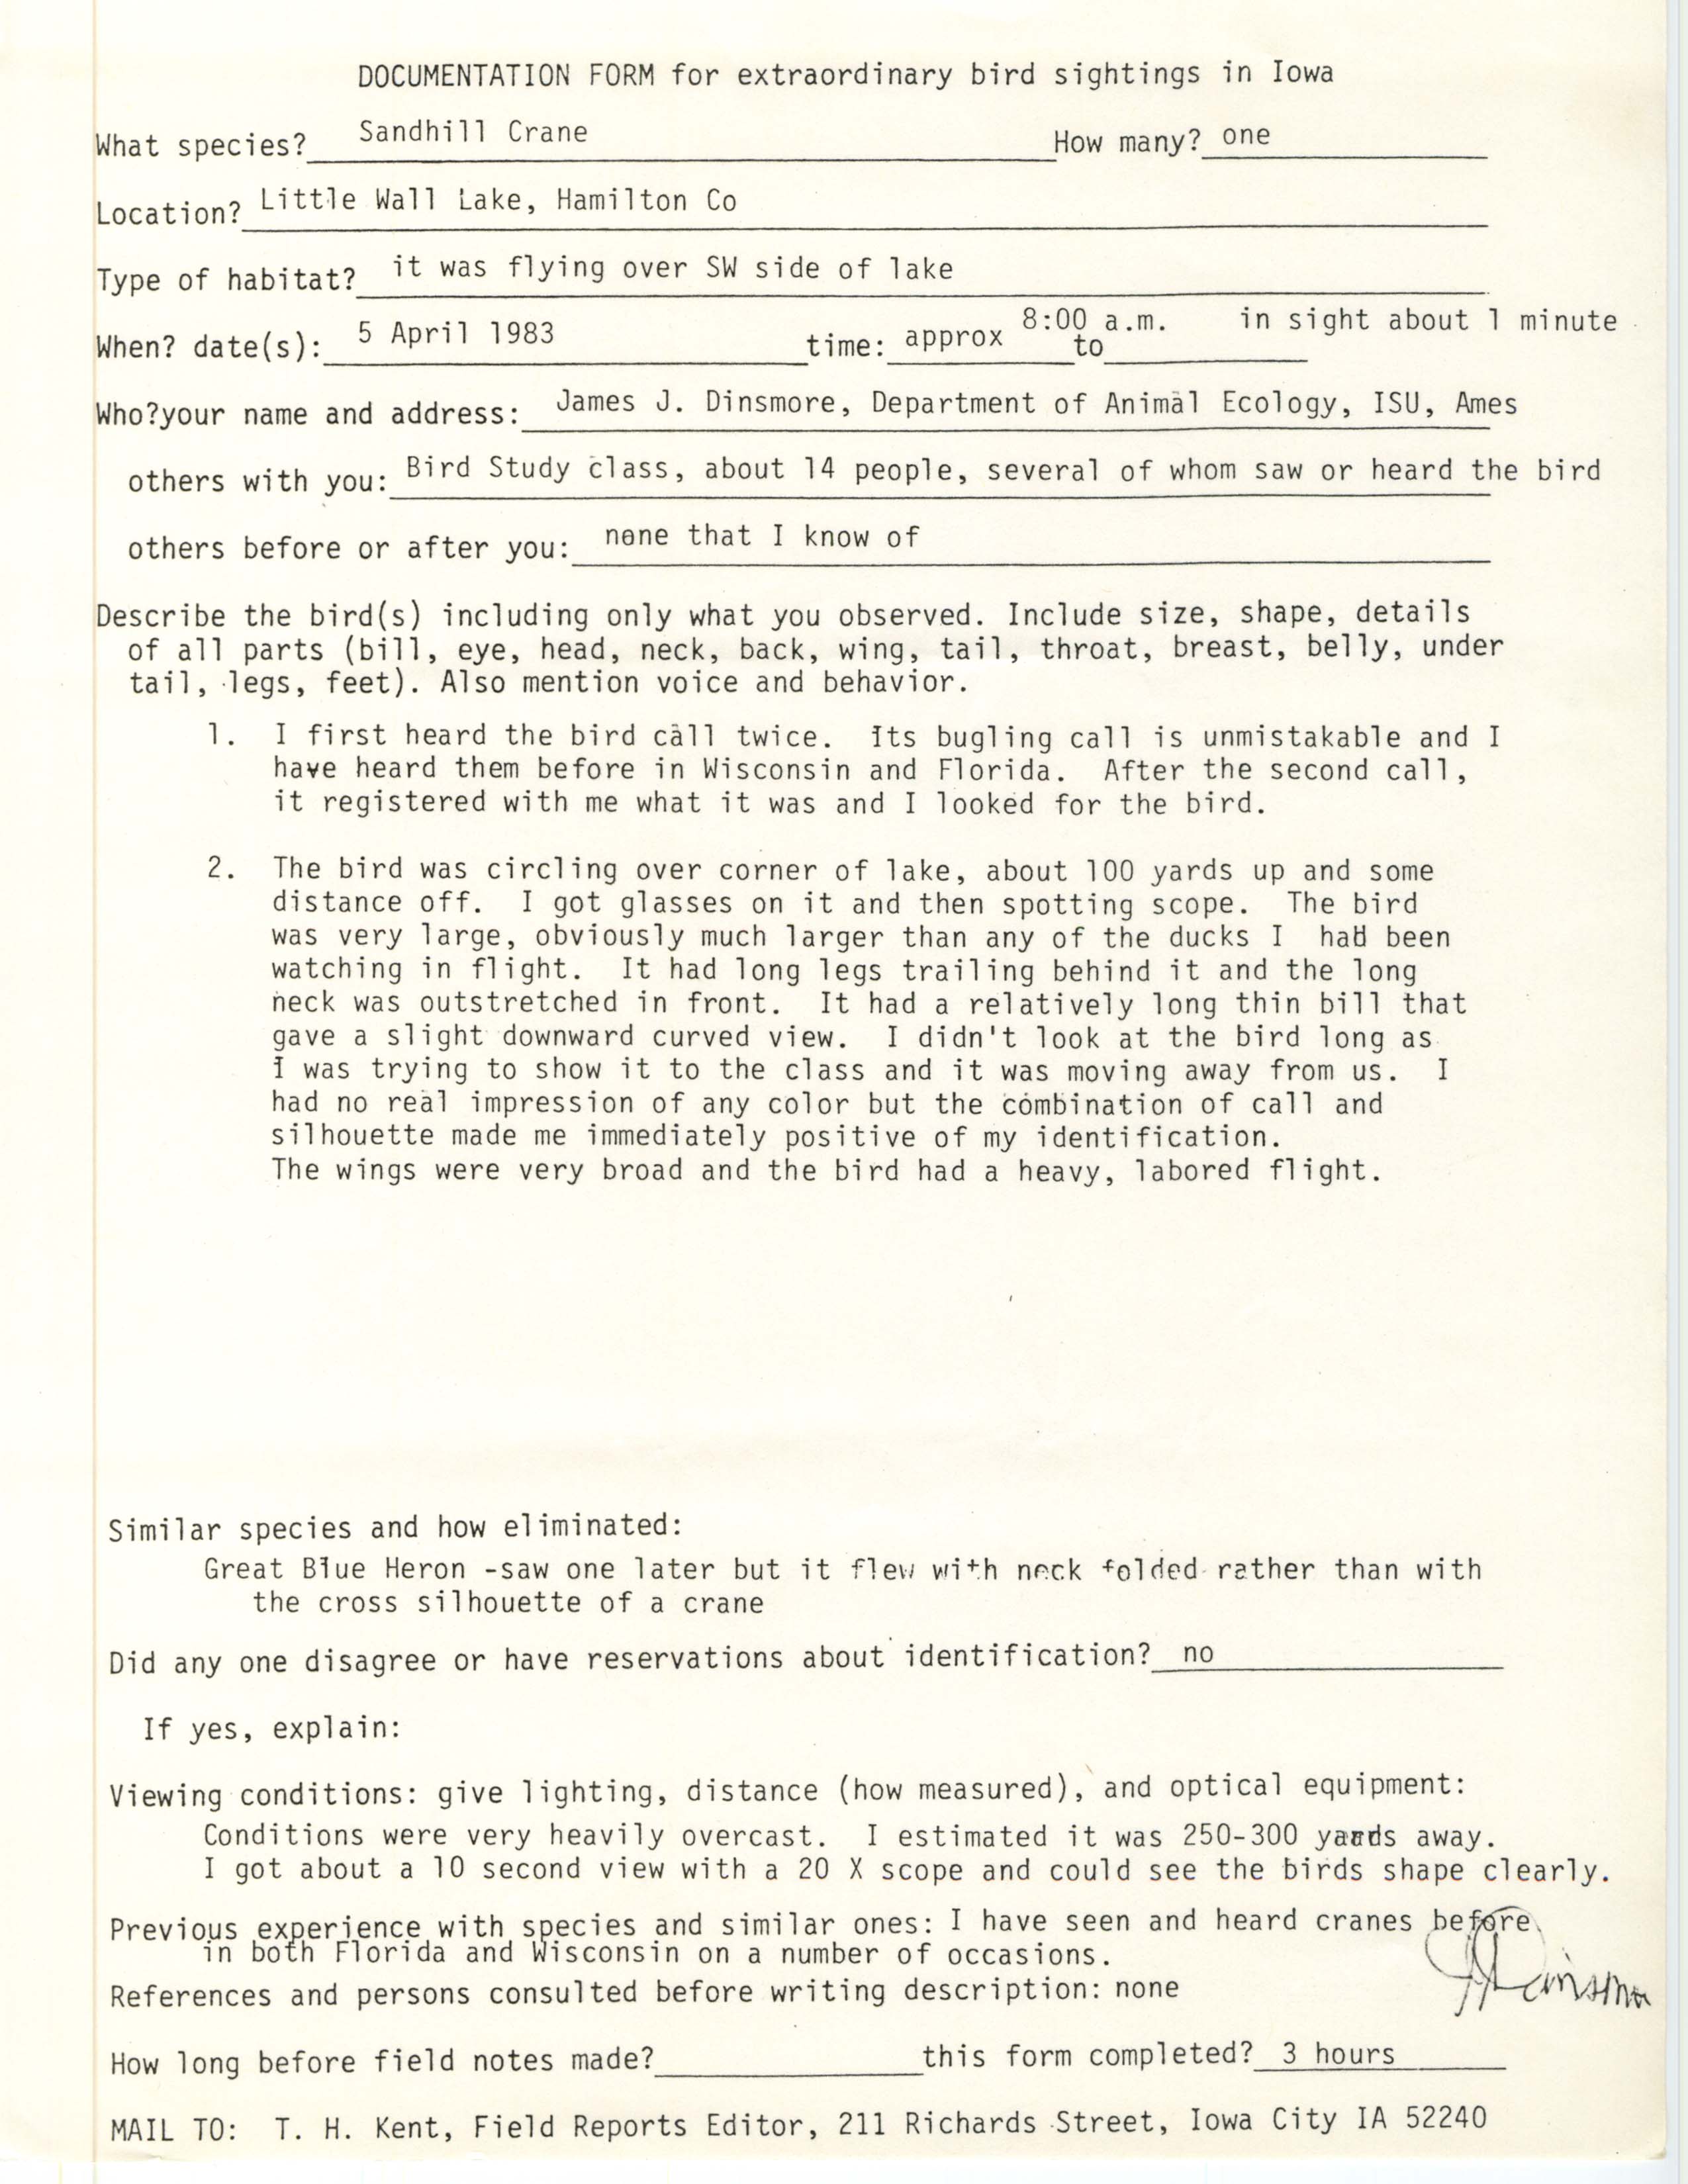 Rare bird documentation form for Sandhill Crane at Little Wall Lake, 1983